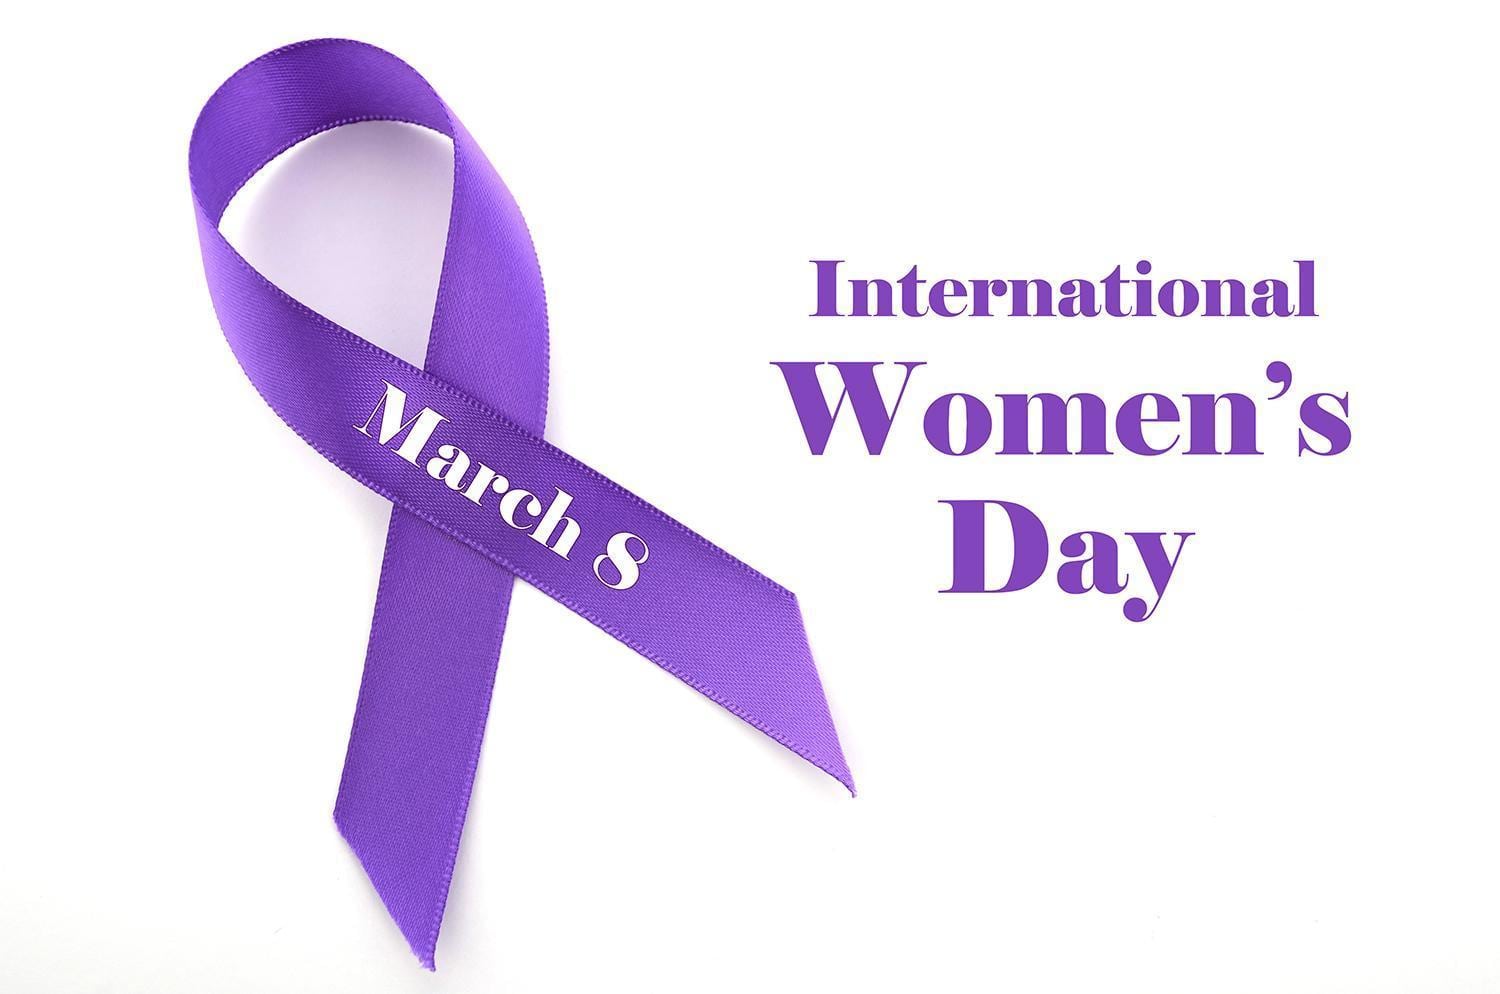 SPEECH ON INTERNATIONAL WOMEN’S DAY